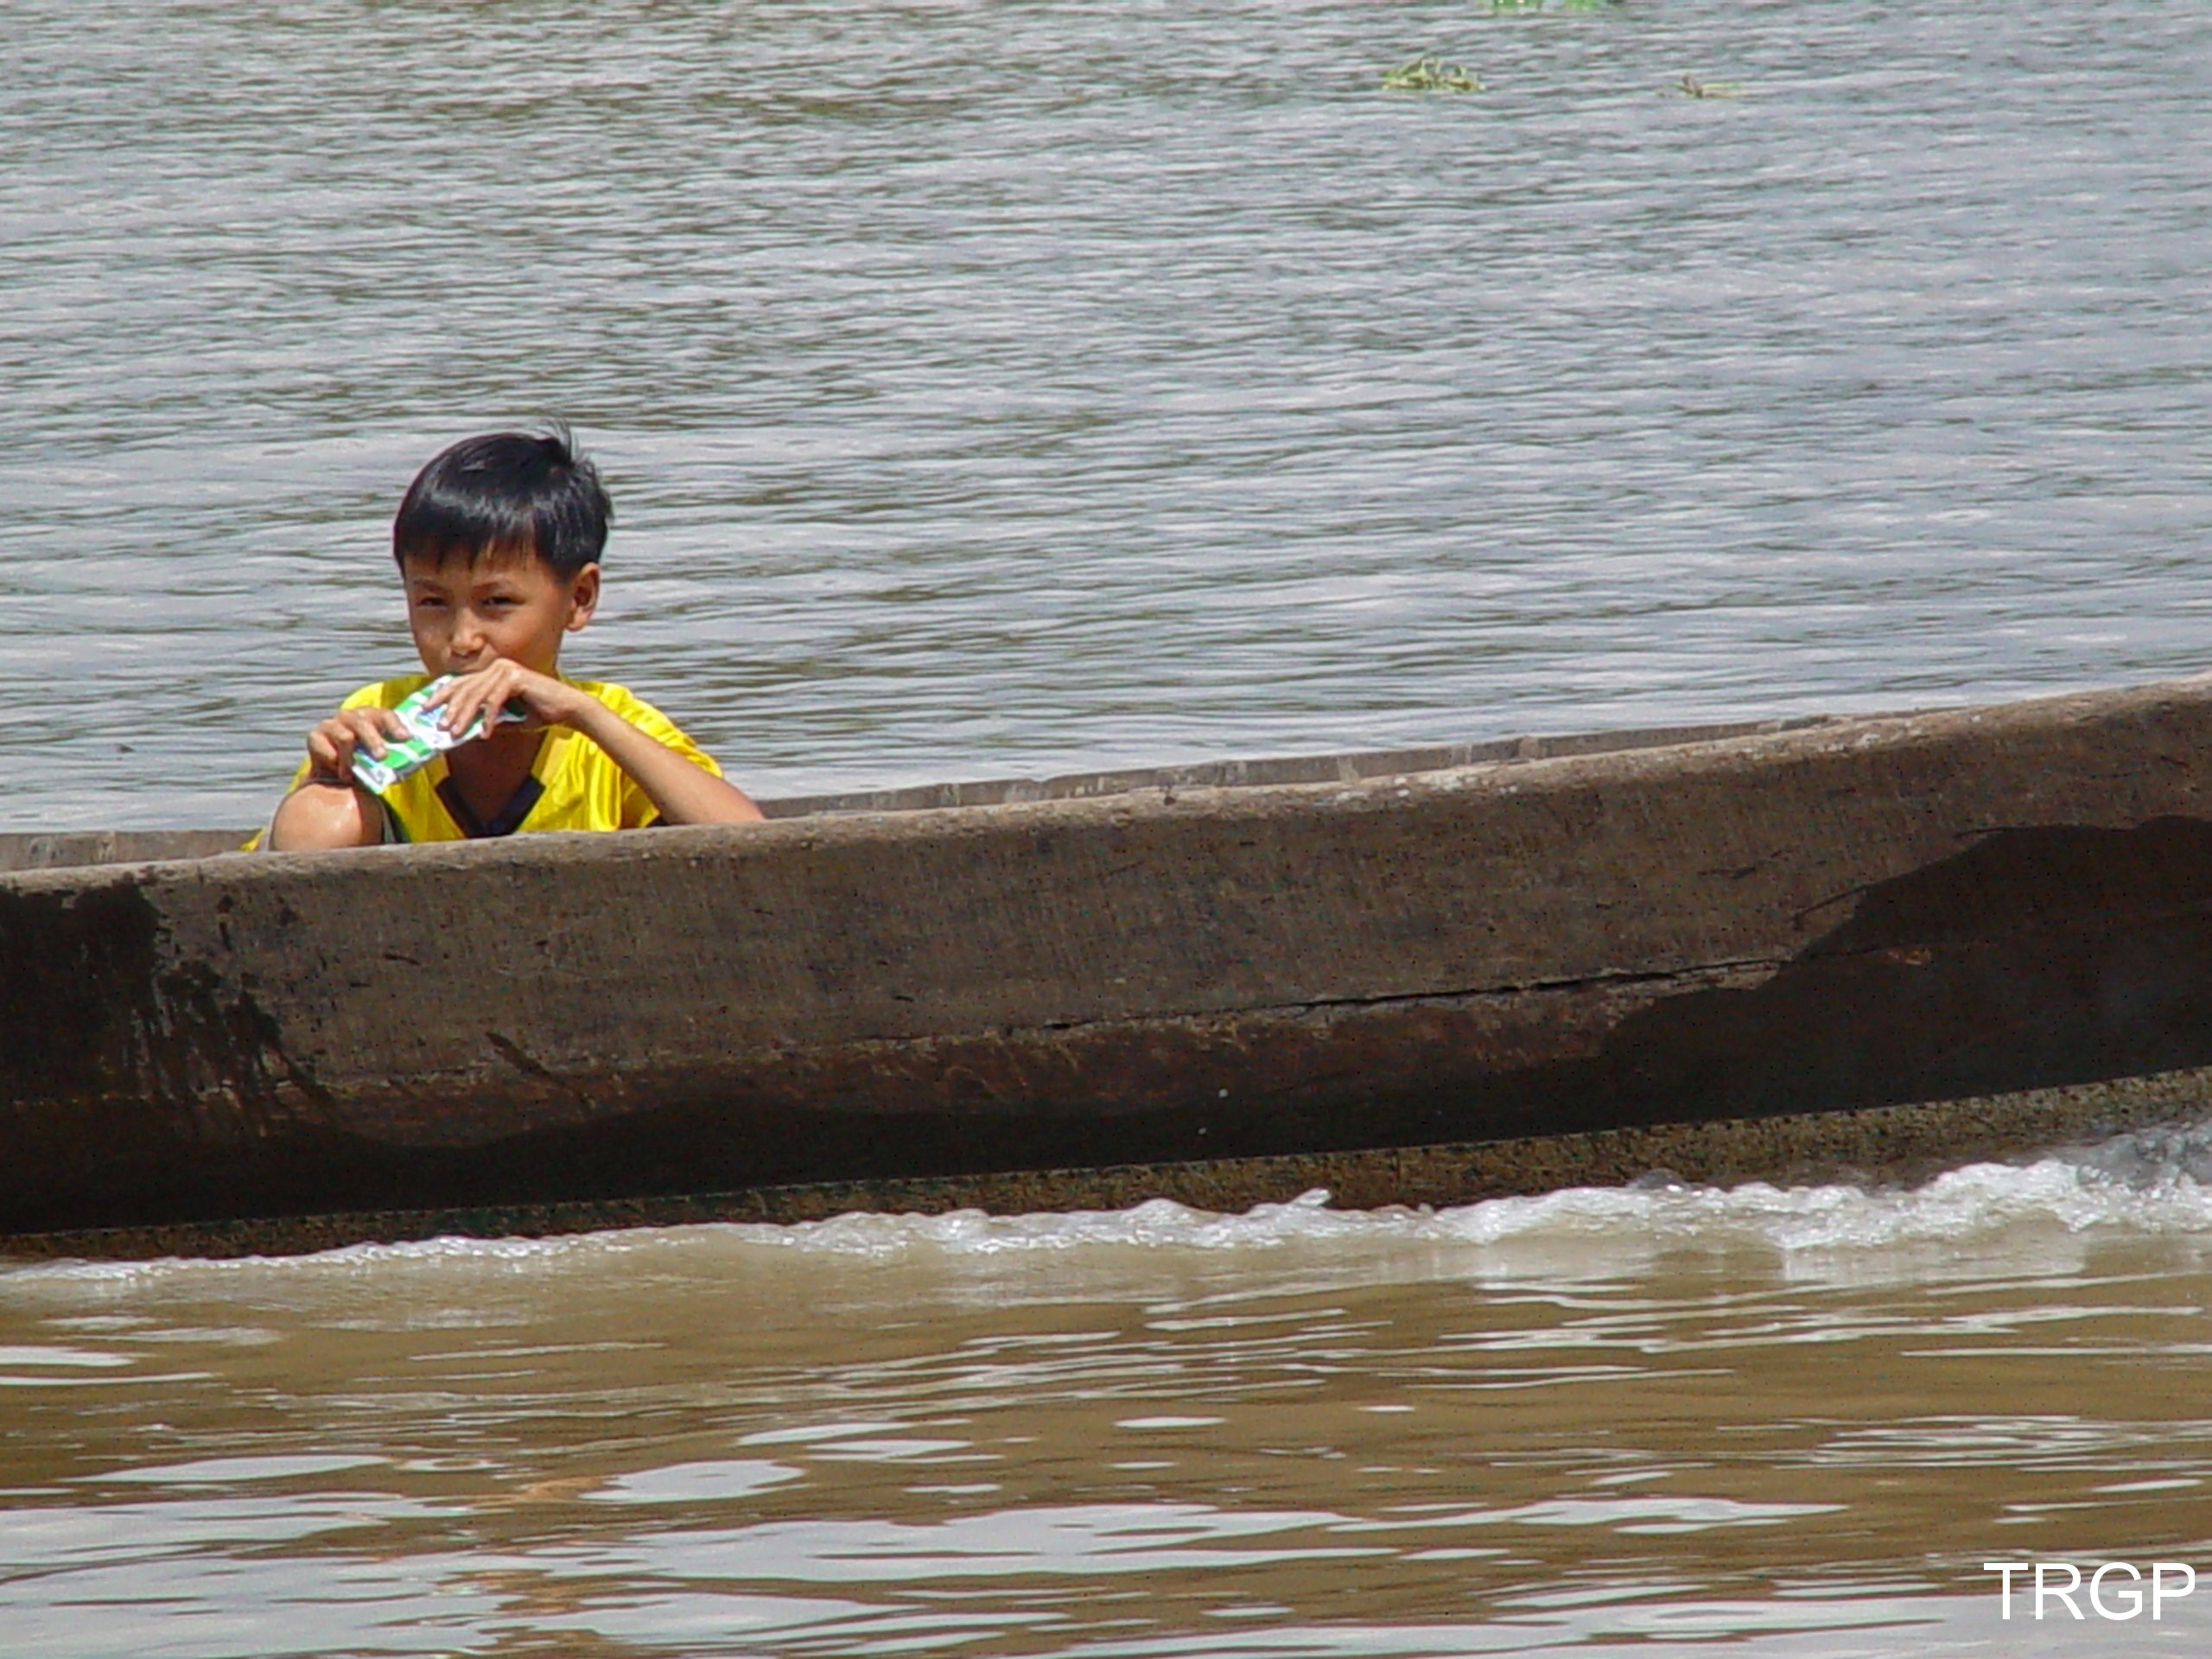 Delta de Mekong